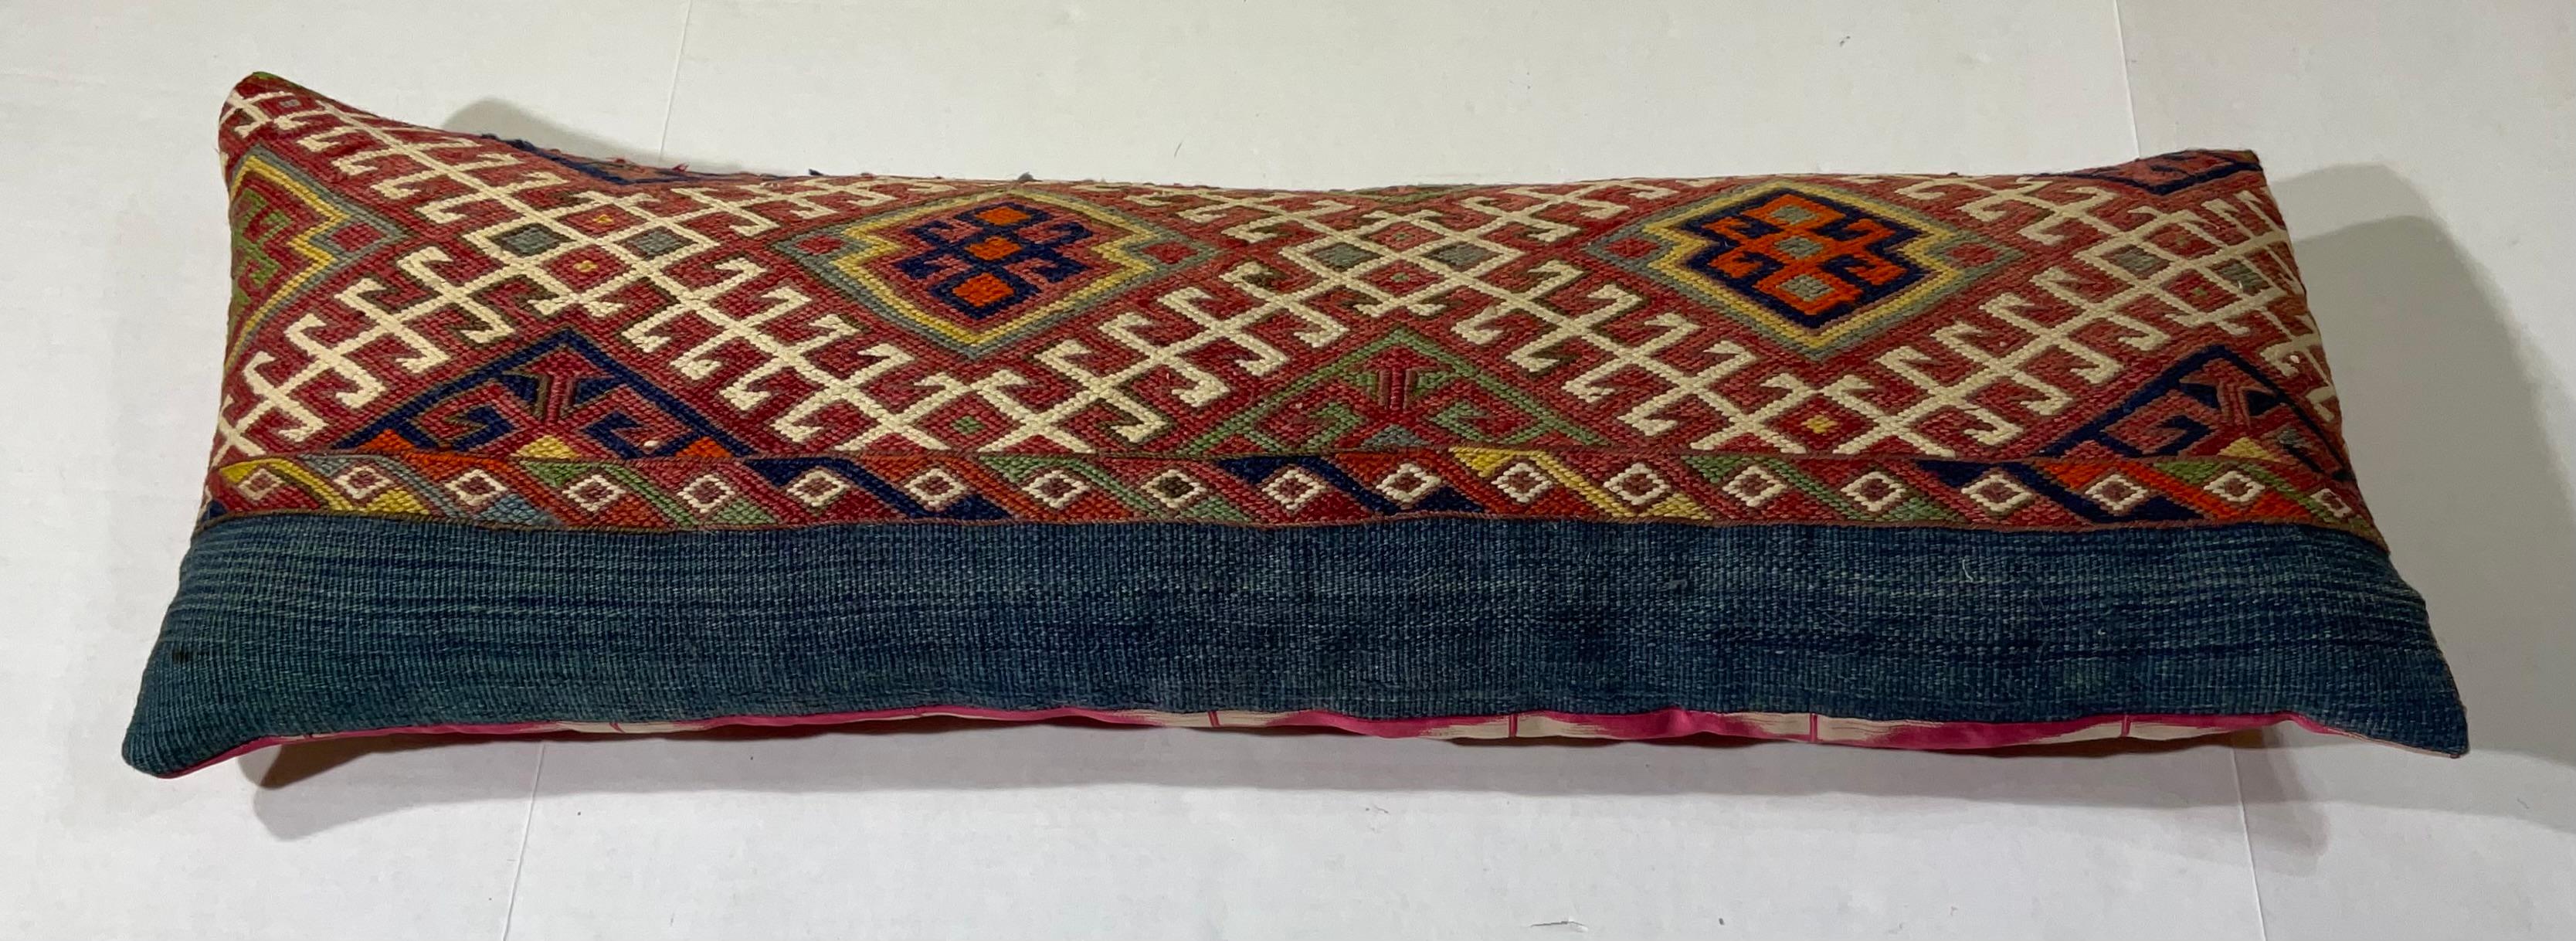 20th Century Flat-Weave Geometric Motif Kilim Rug Fragment Pillow For Sale